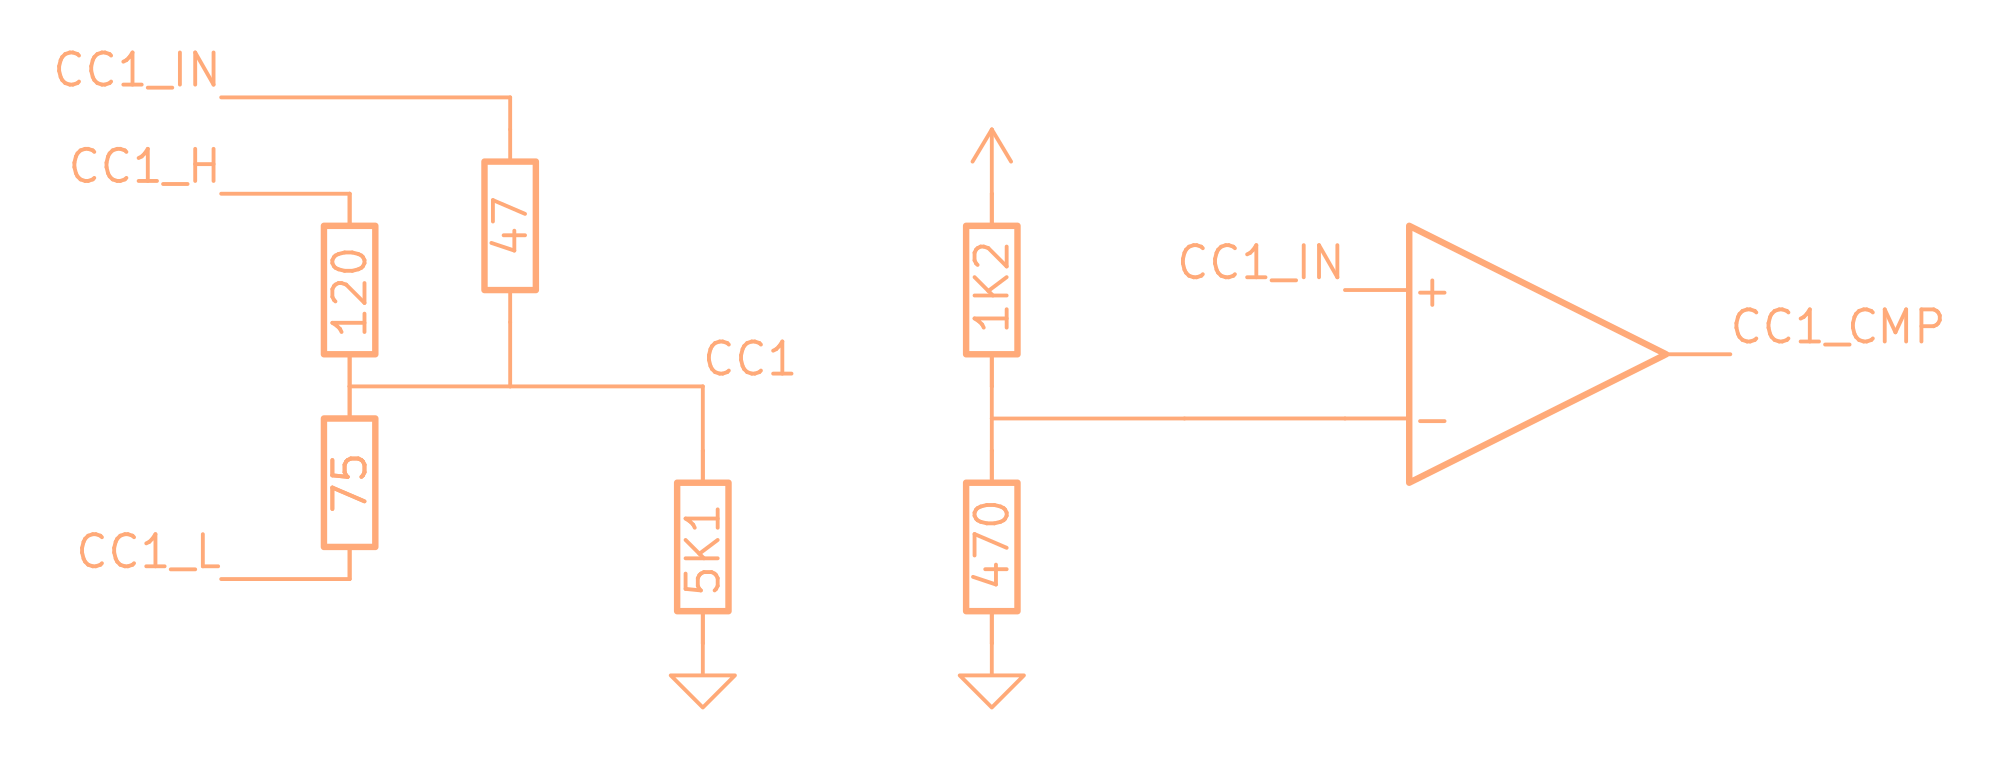 schematic for transceiver